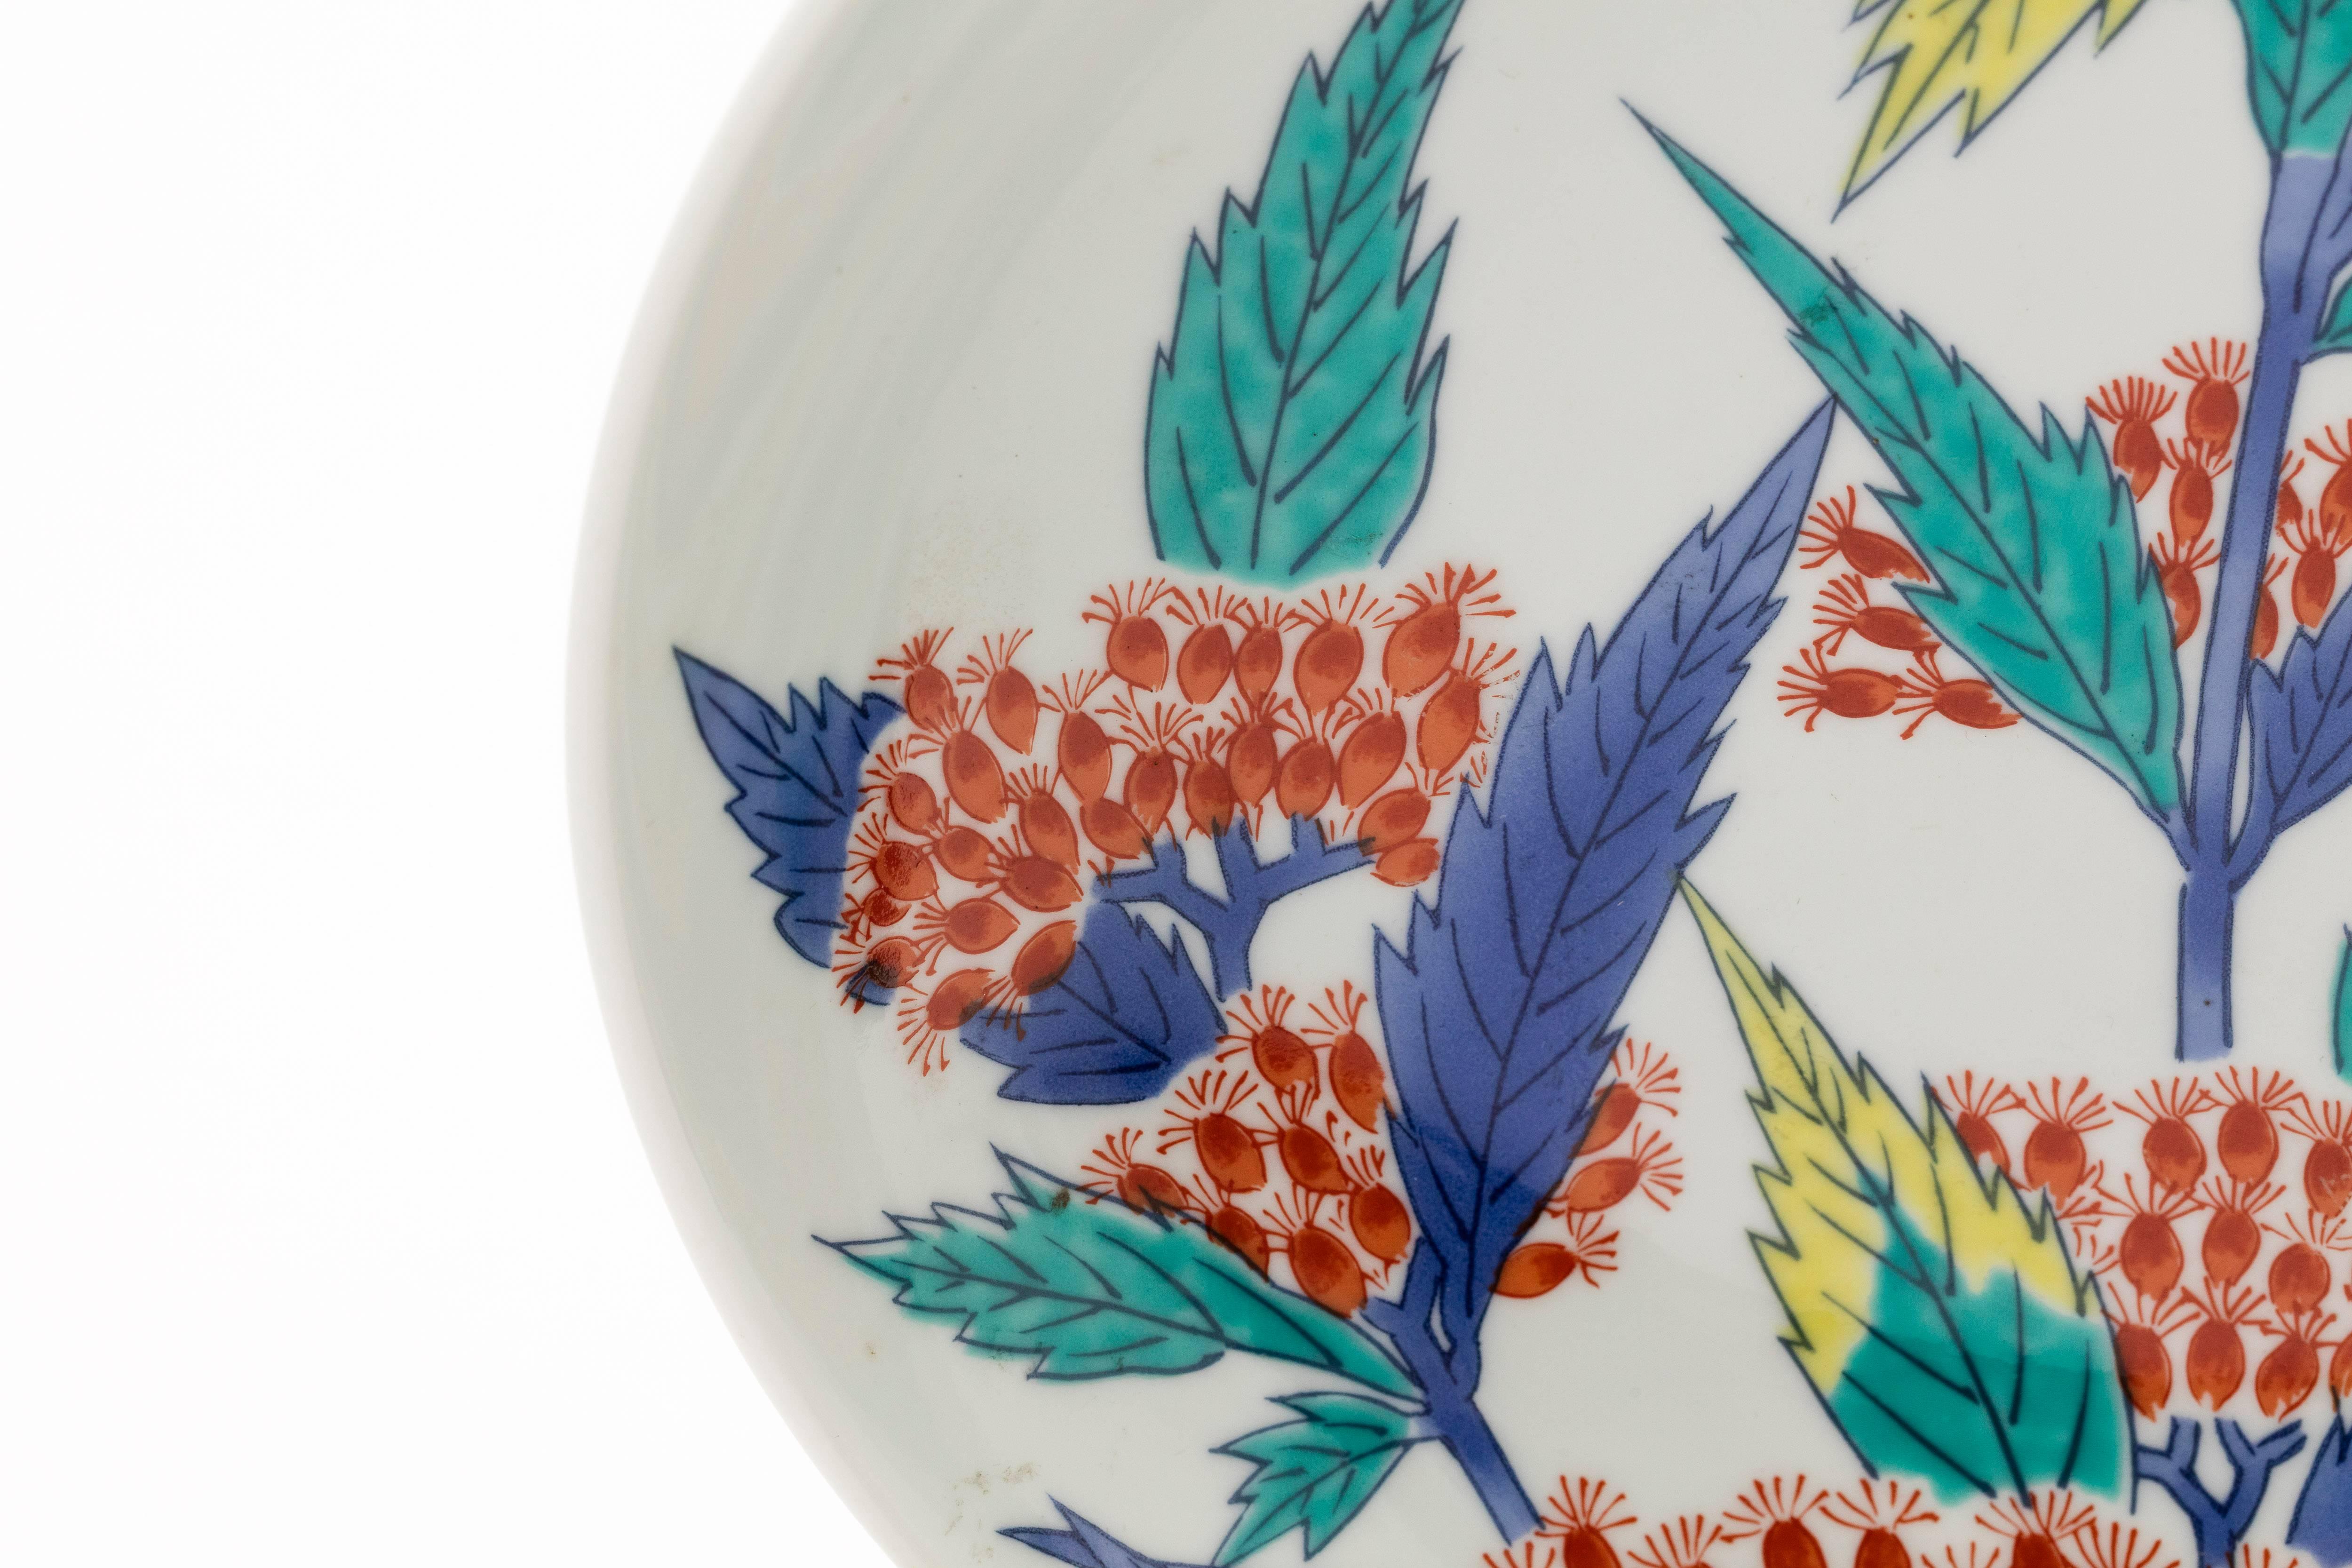 Showa Vintage Japanese Nabeshima Porcelain Plate with Floral Design, circa 1960